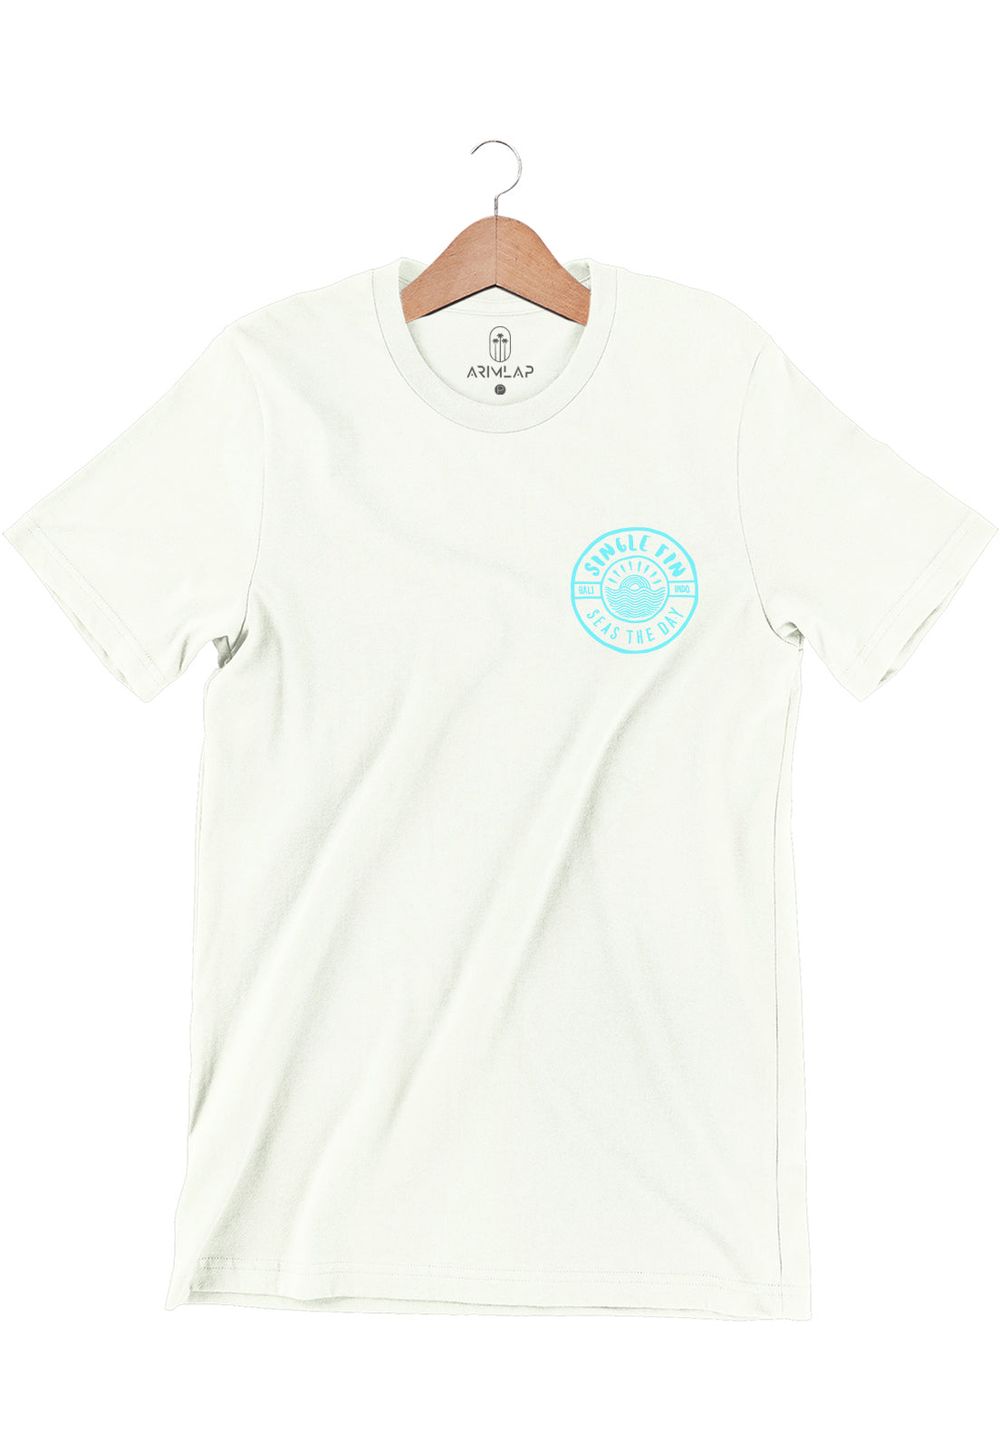 Camiseta Arimlap Seas The Day Branco Cor:Branco;Tamanho:P;Genero:Masculino